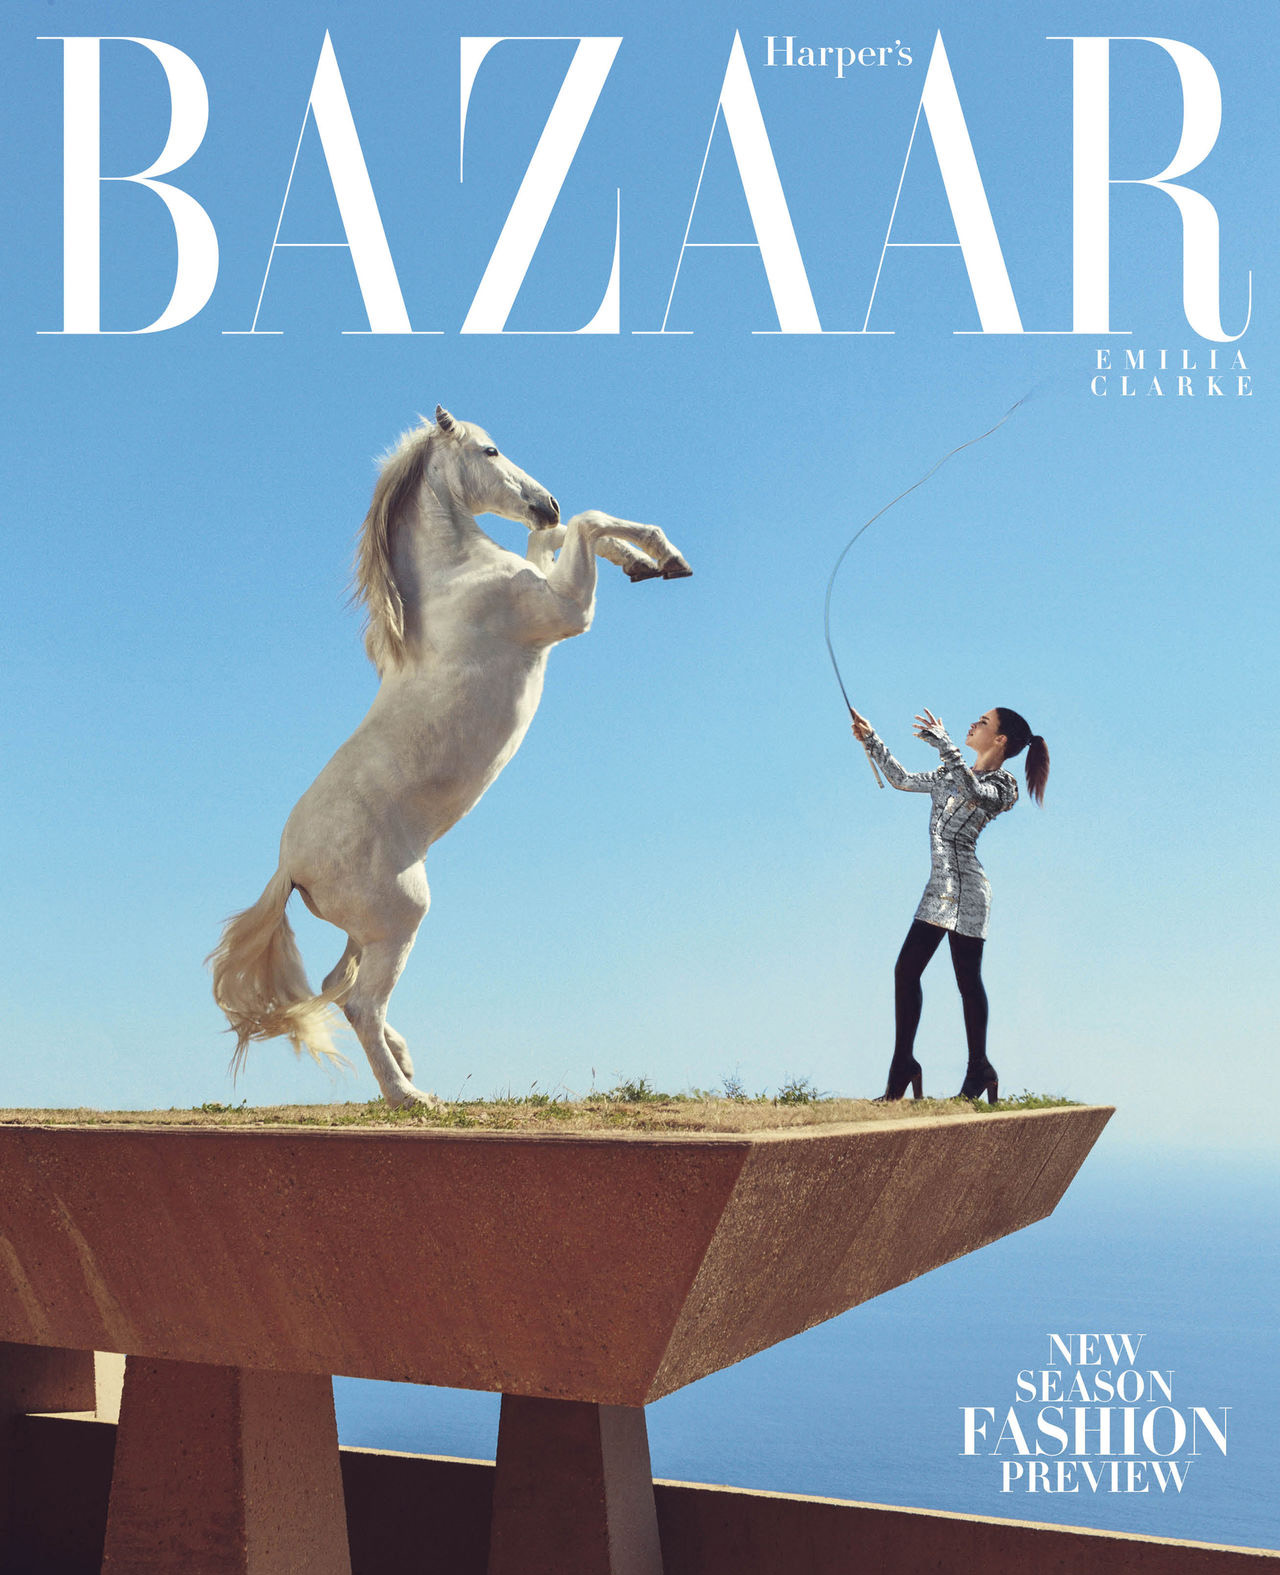 La majestuosa Emilia Clarke en Harper’s Bazaar junio/julio 2015